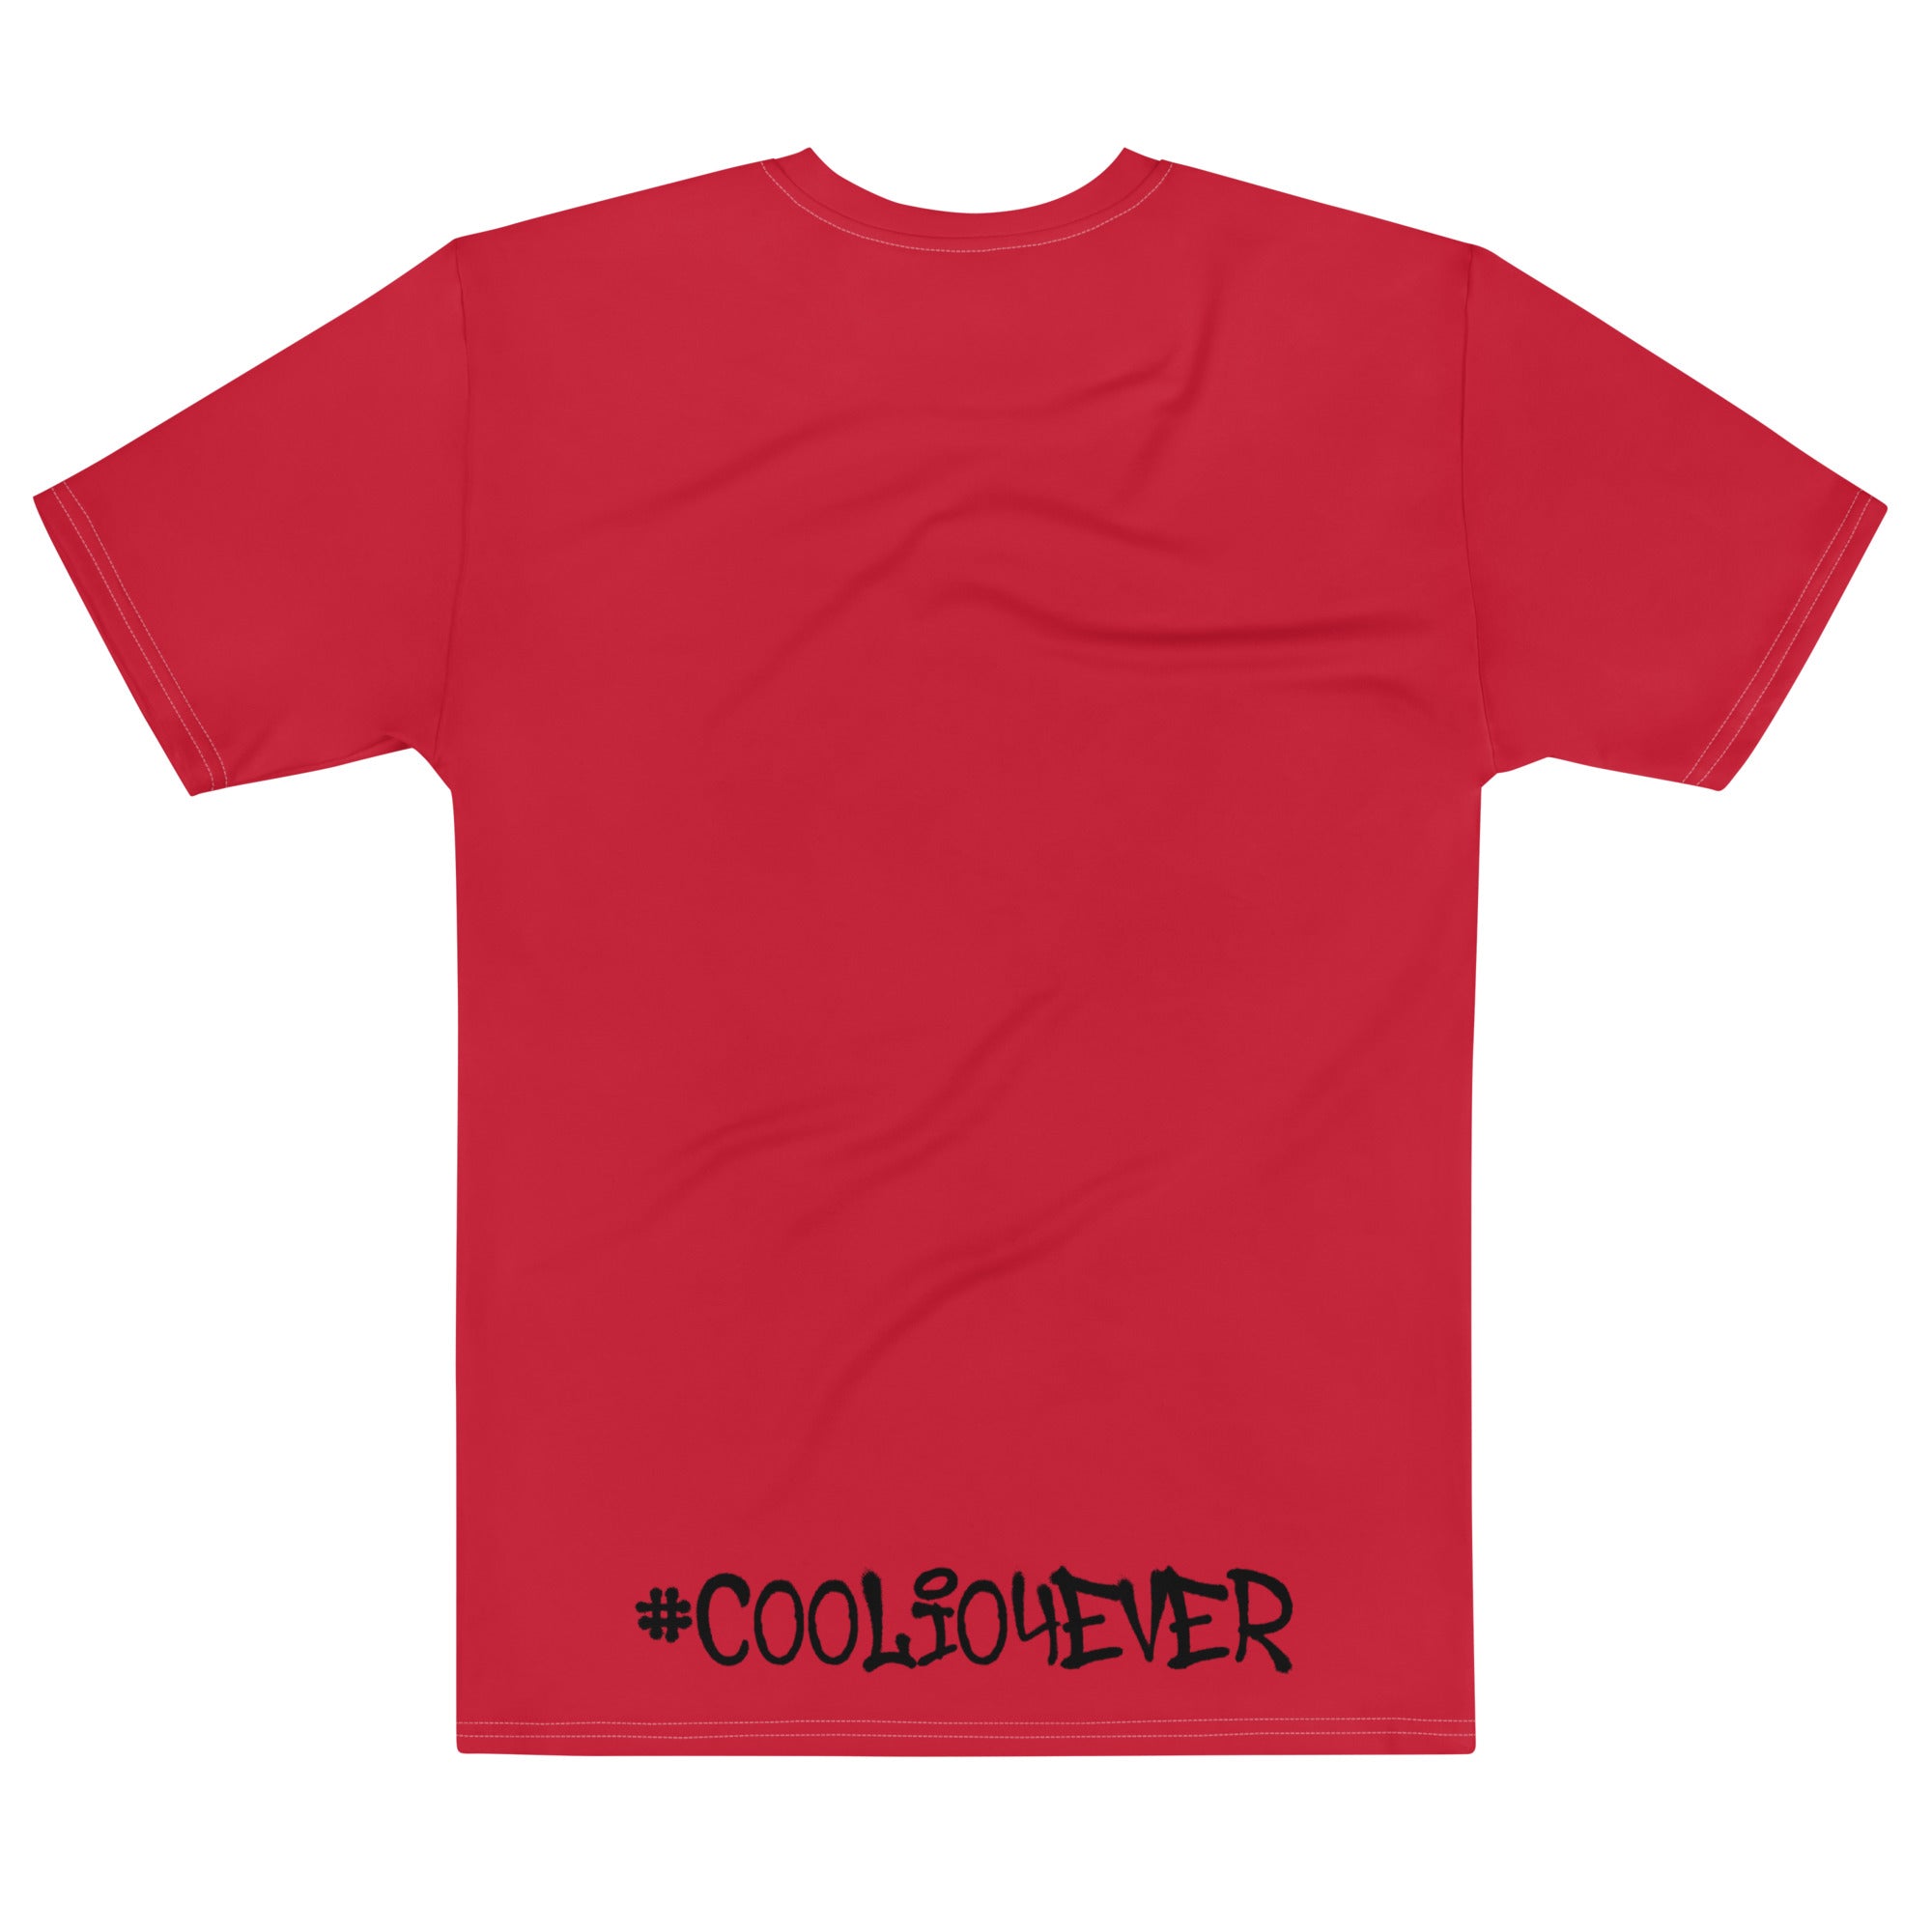 COOLIO - t-shirt